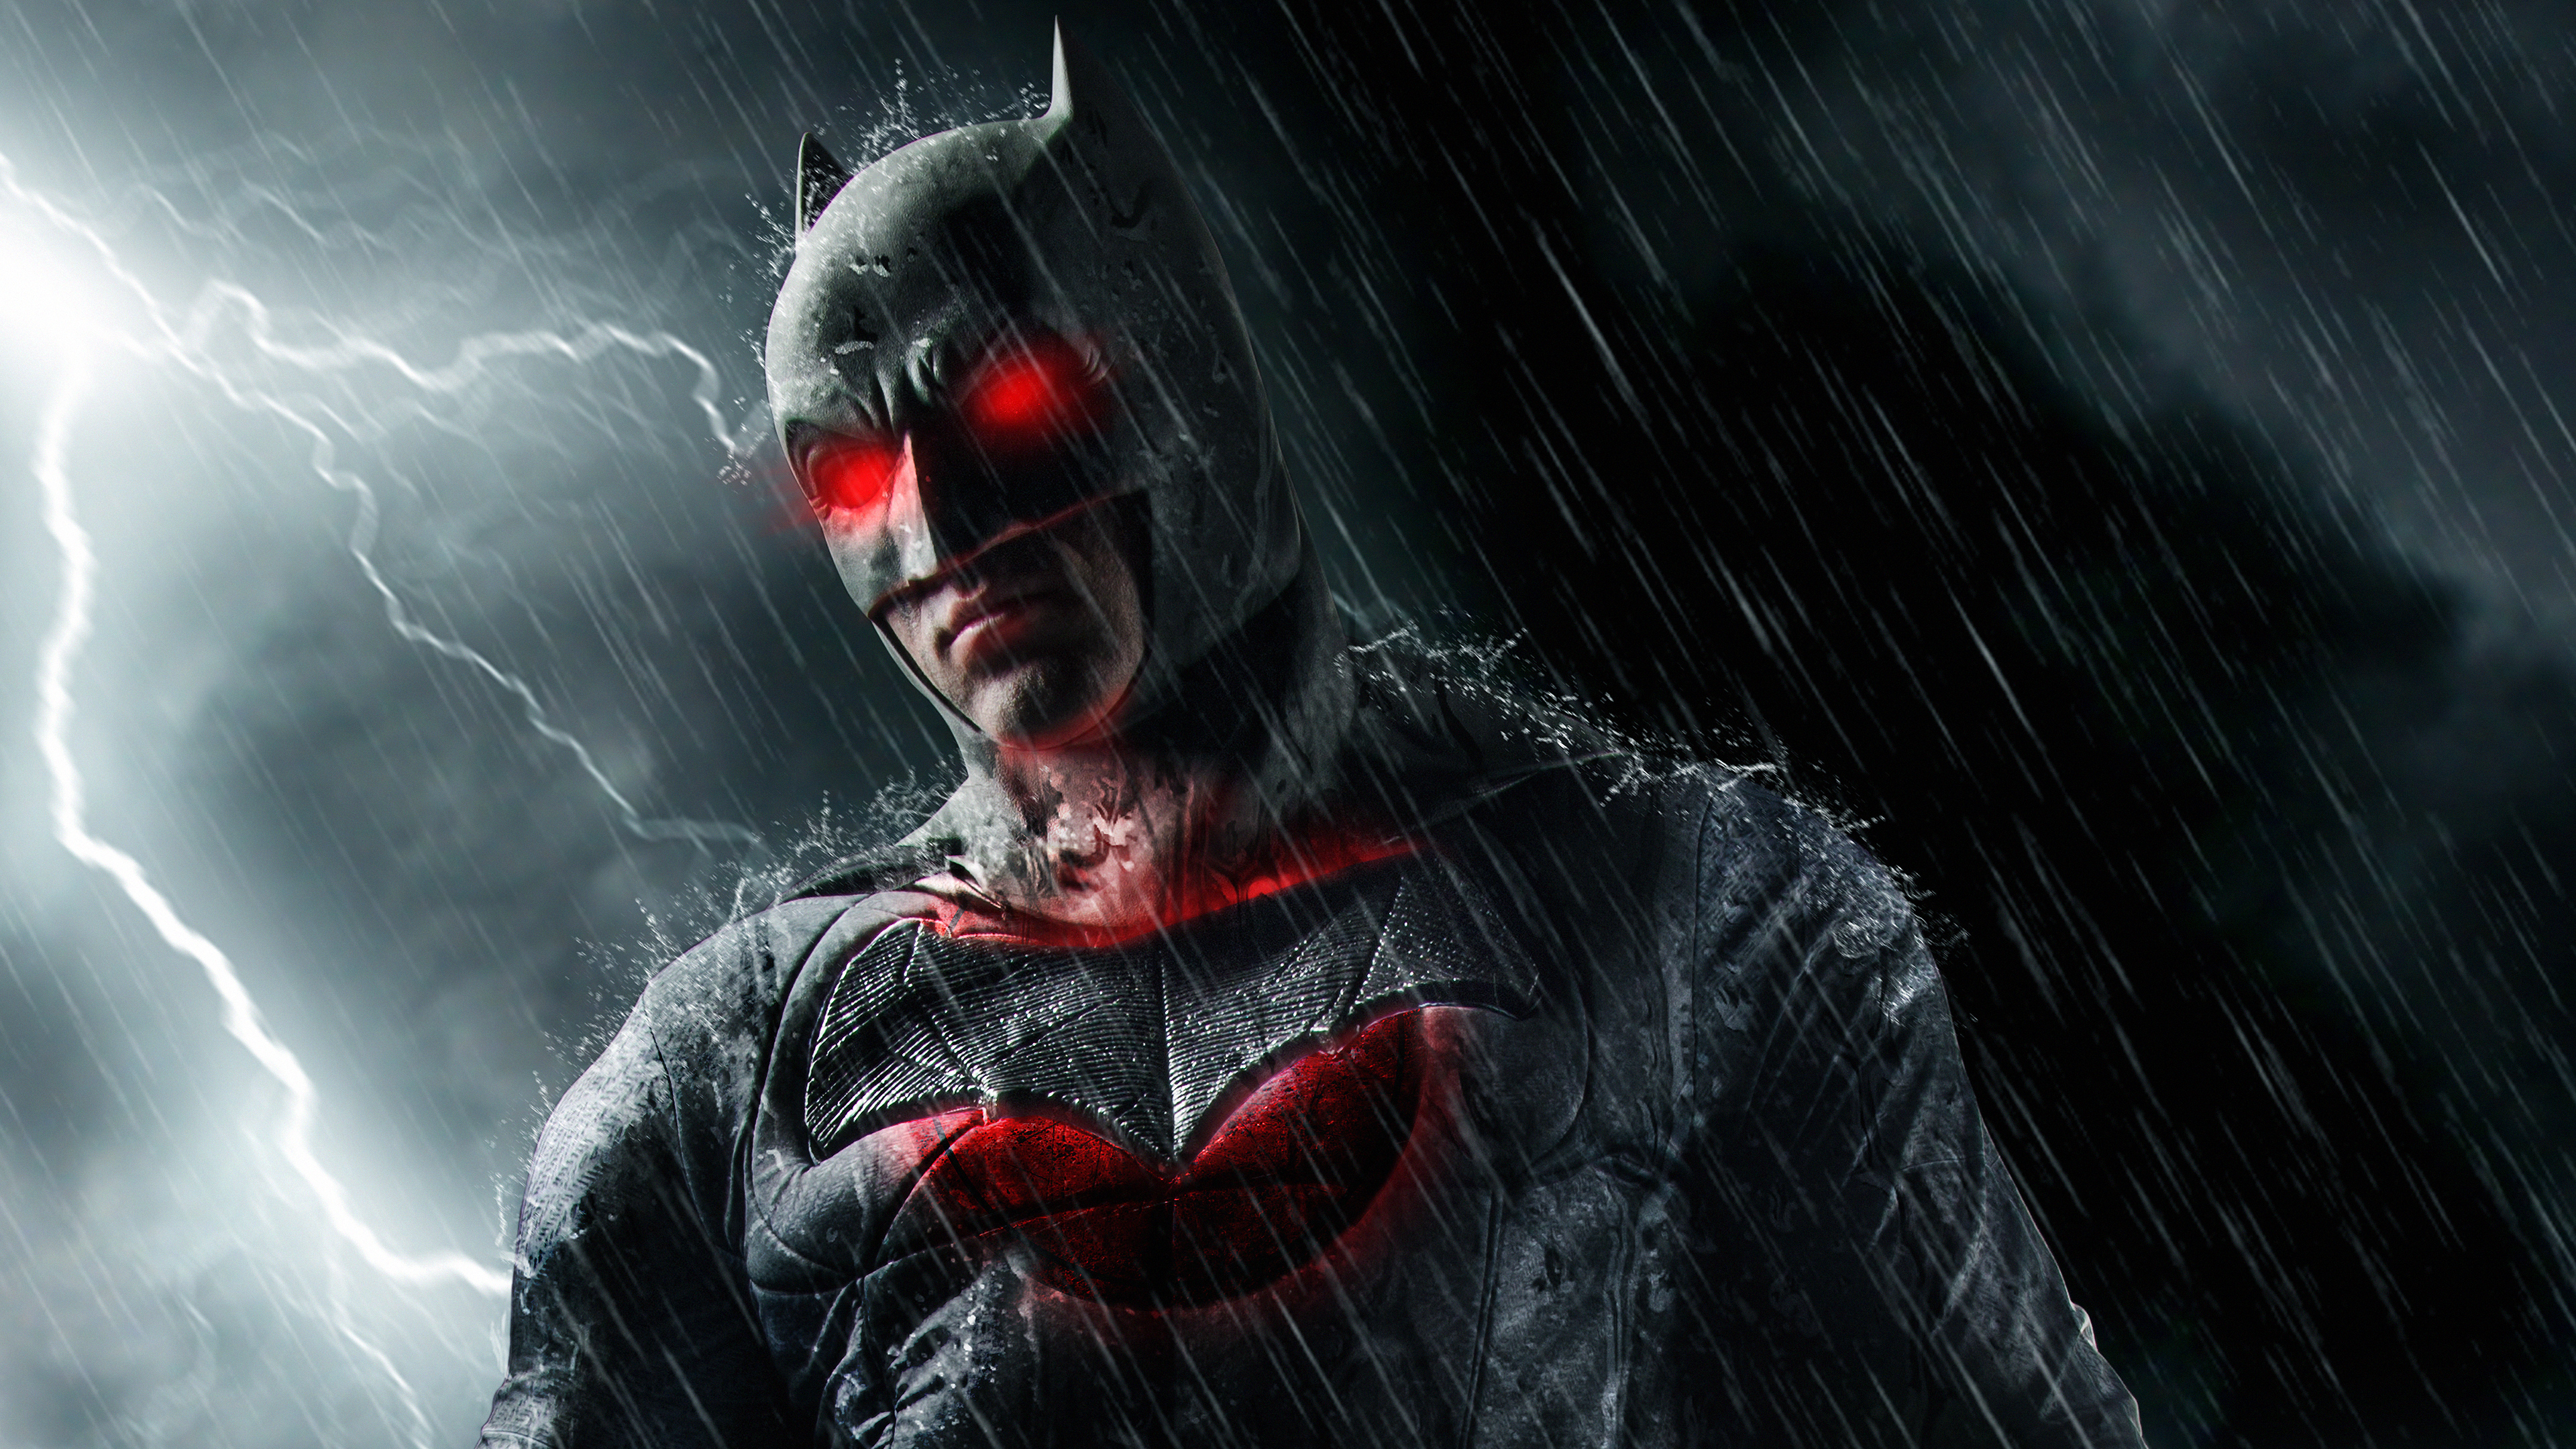 Бесплатное фото Бэтмен под дождем